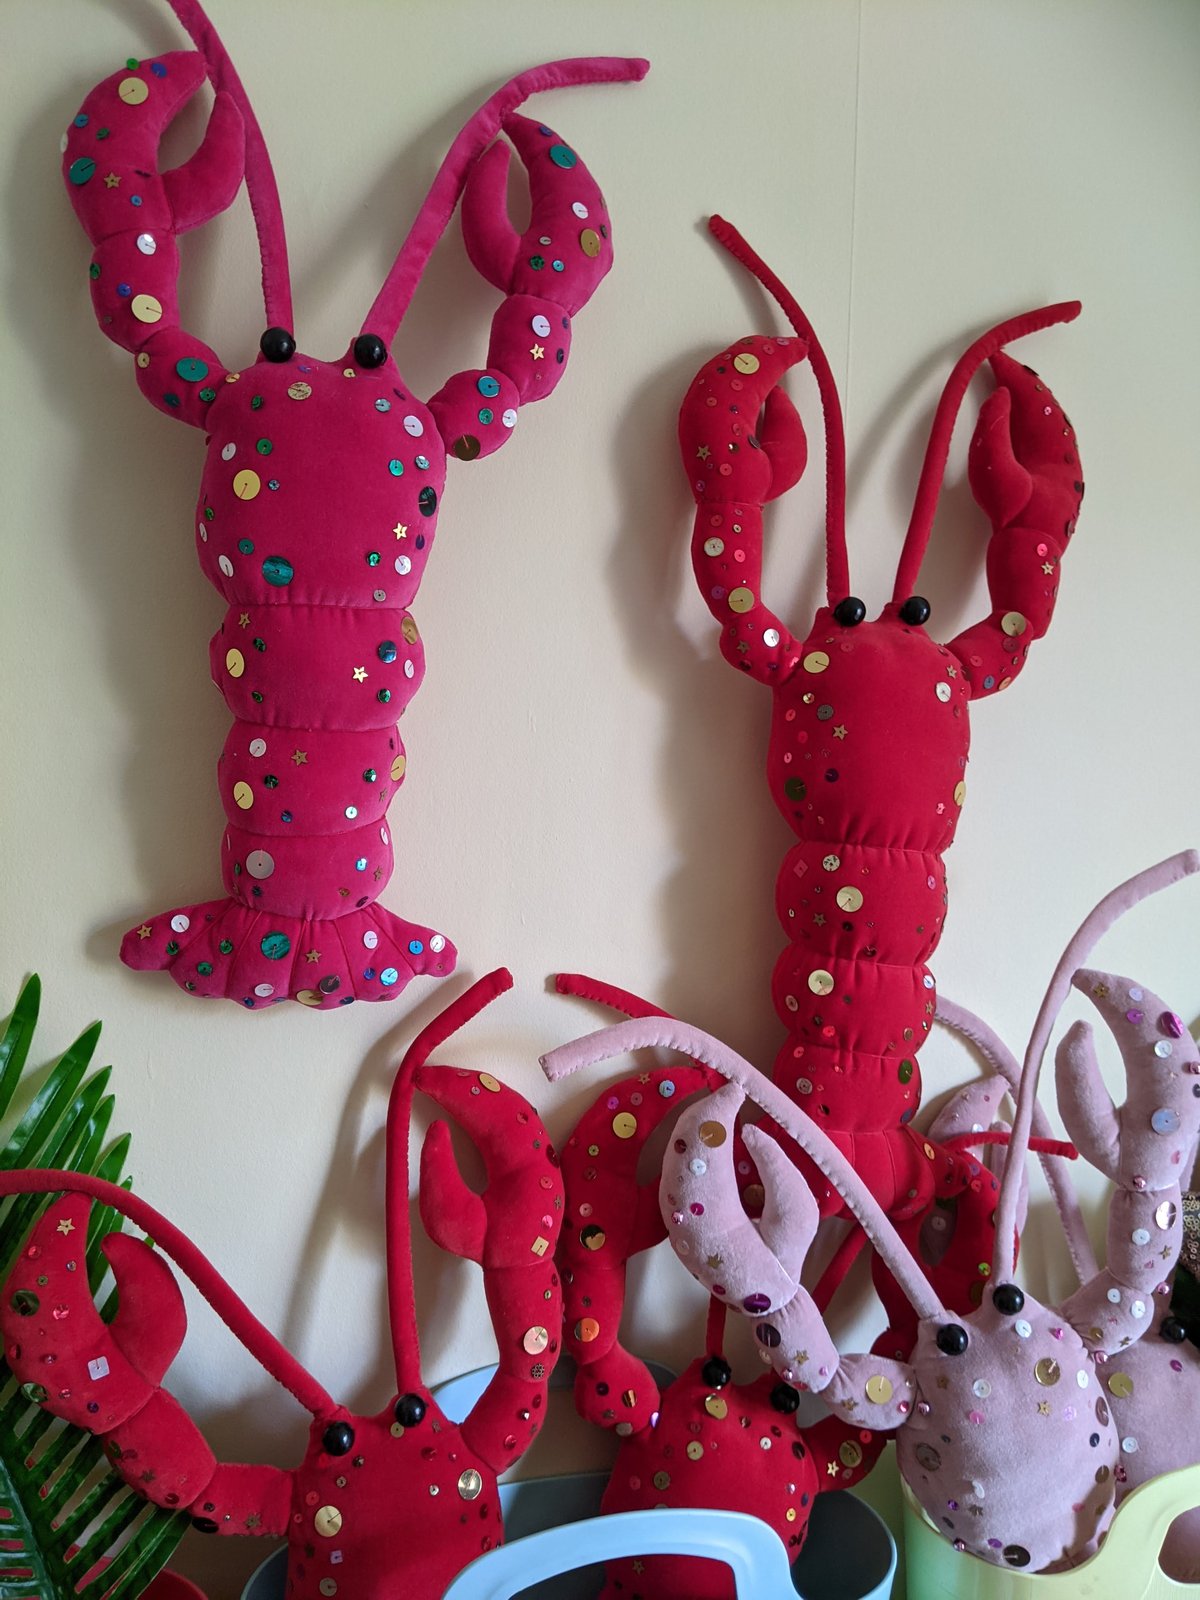 Image of Vevet Lobster Wall Decoration